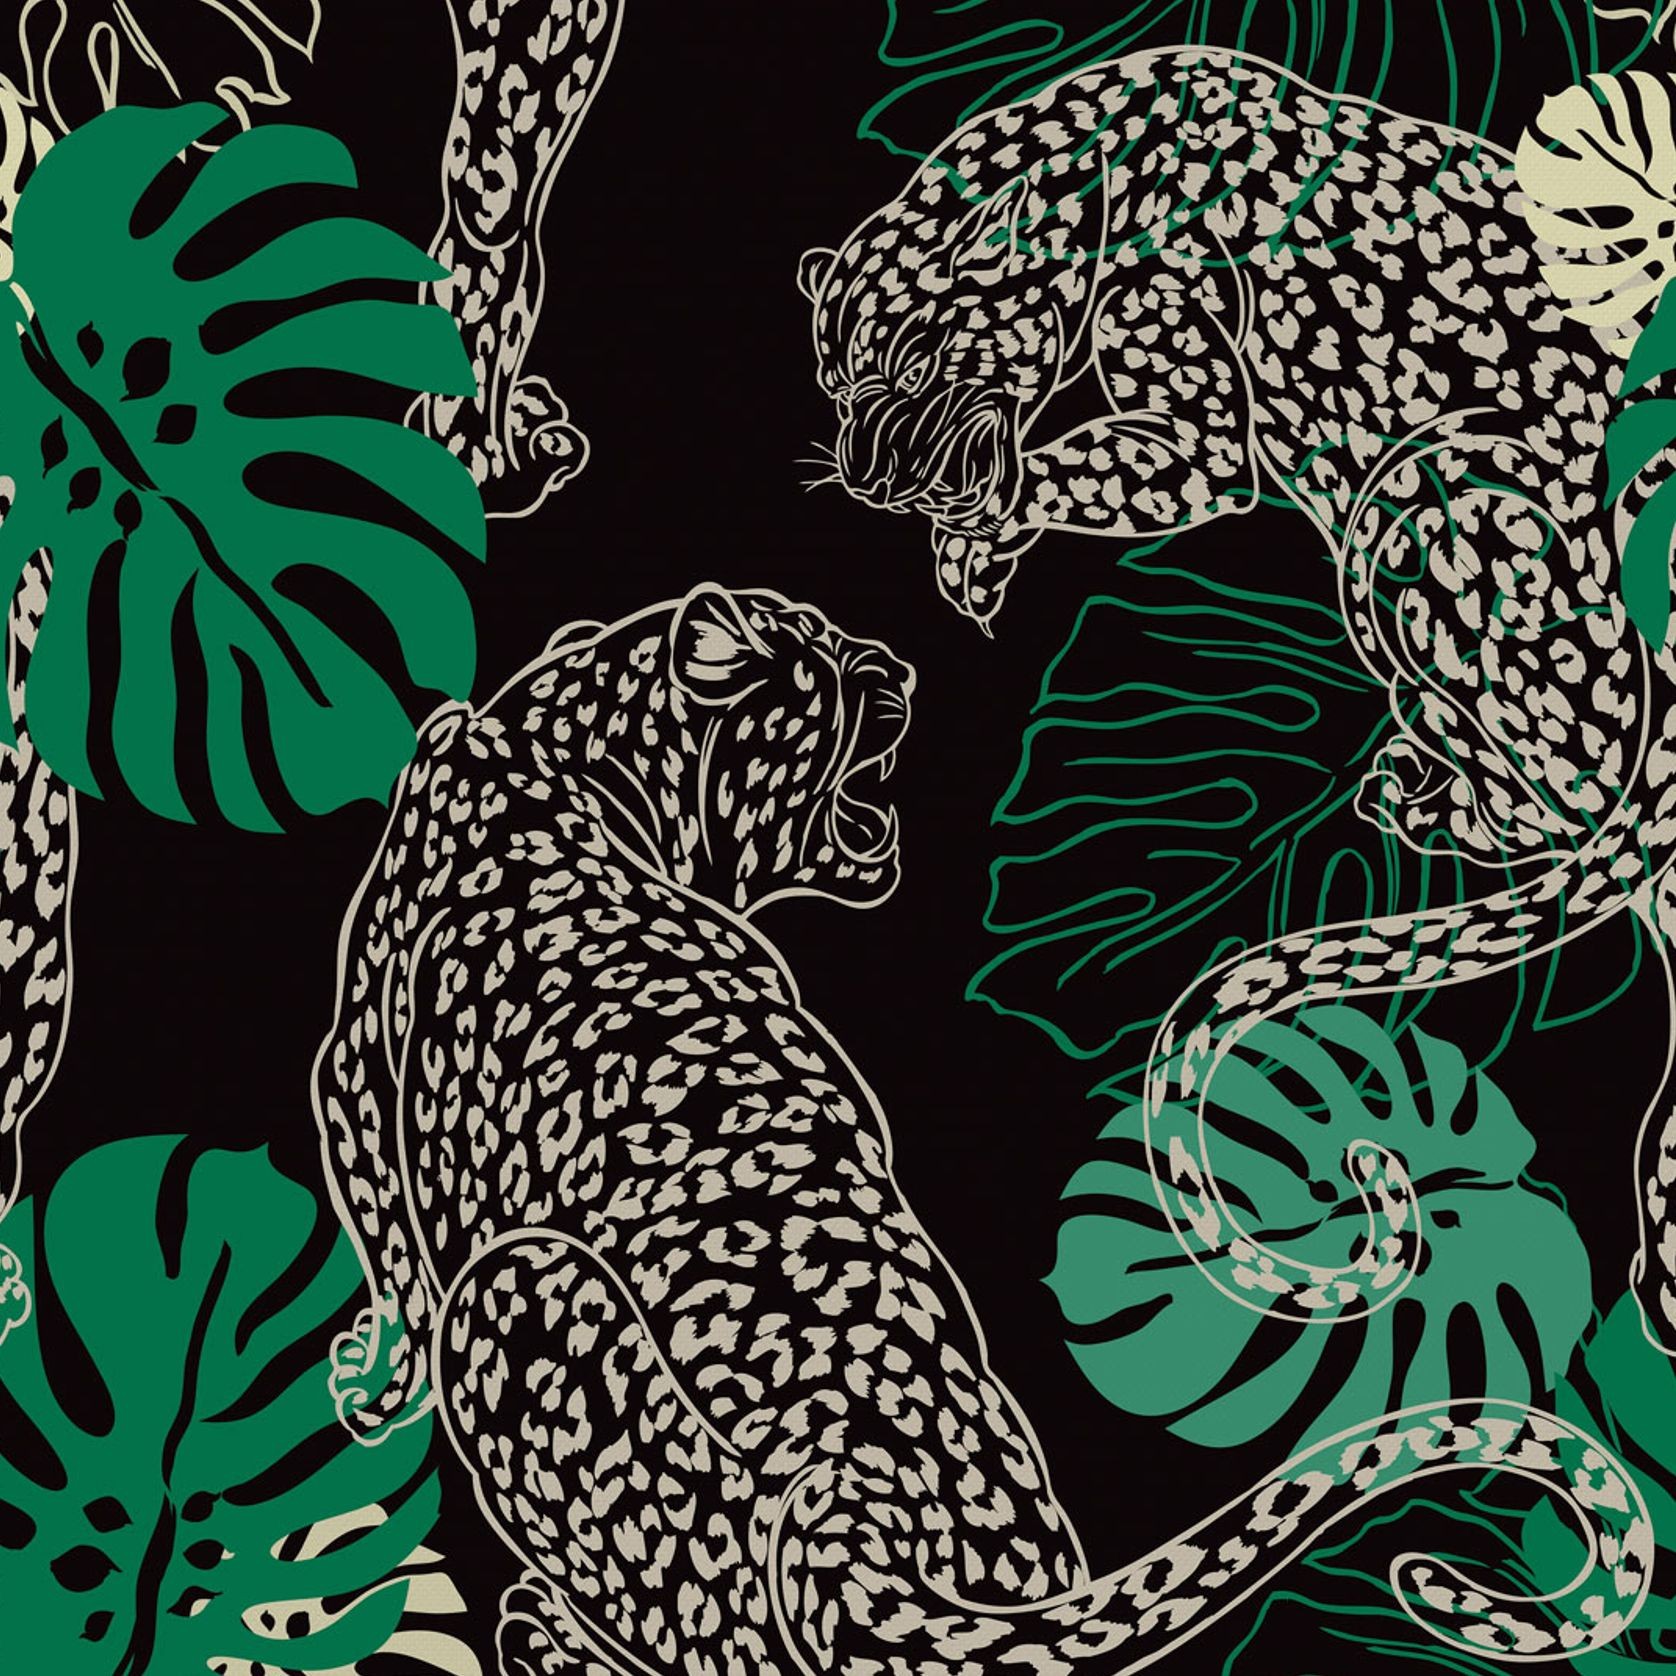 Leopard Wallpaper gallery detail image